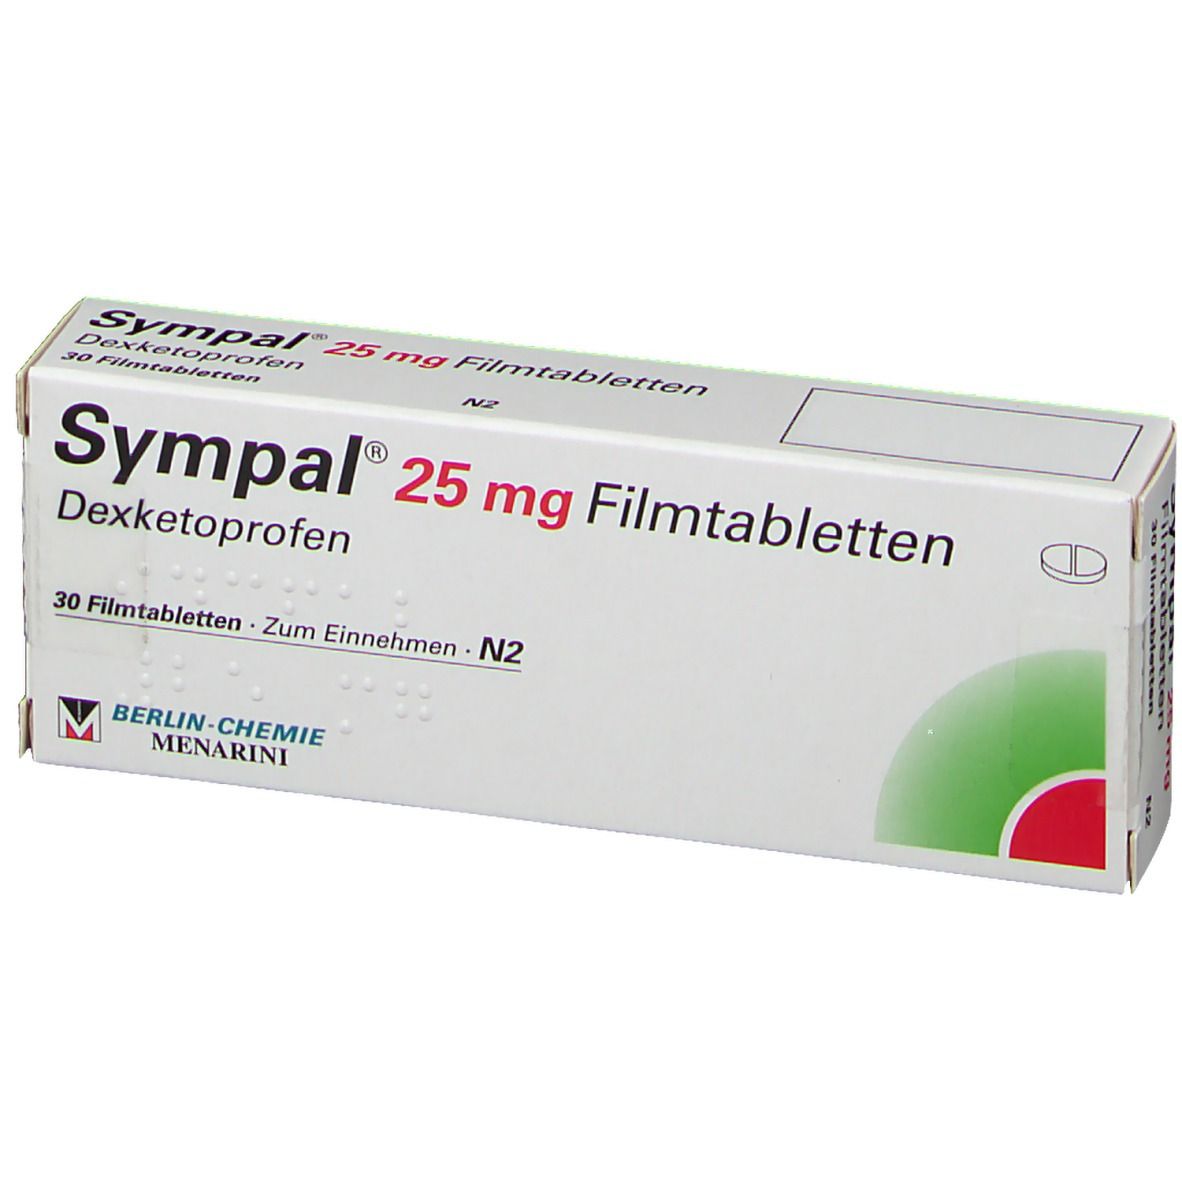 Sympal® 25 mg